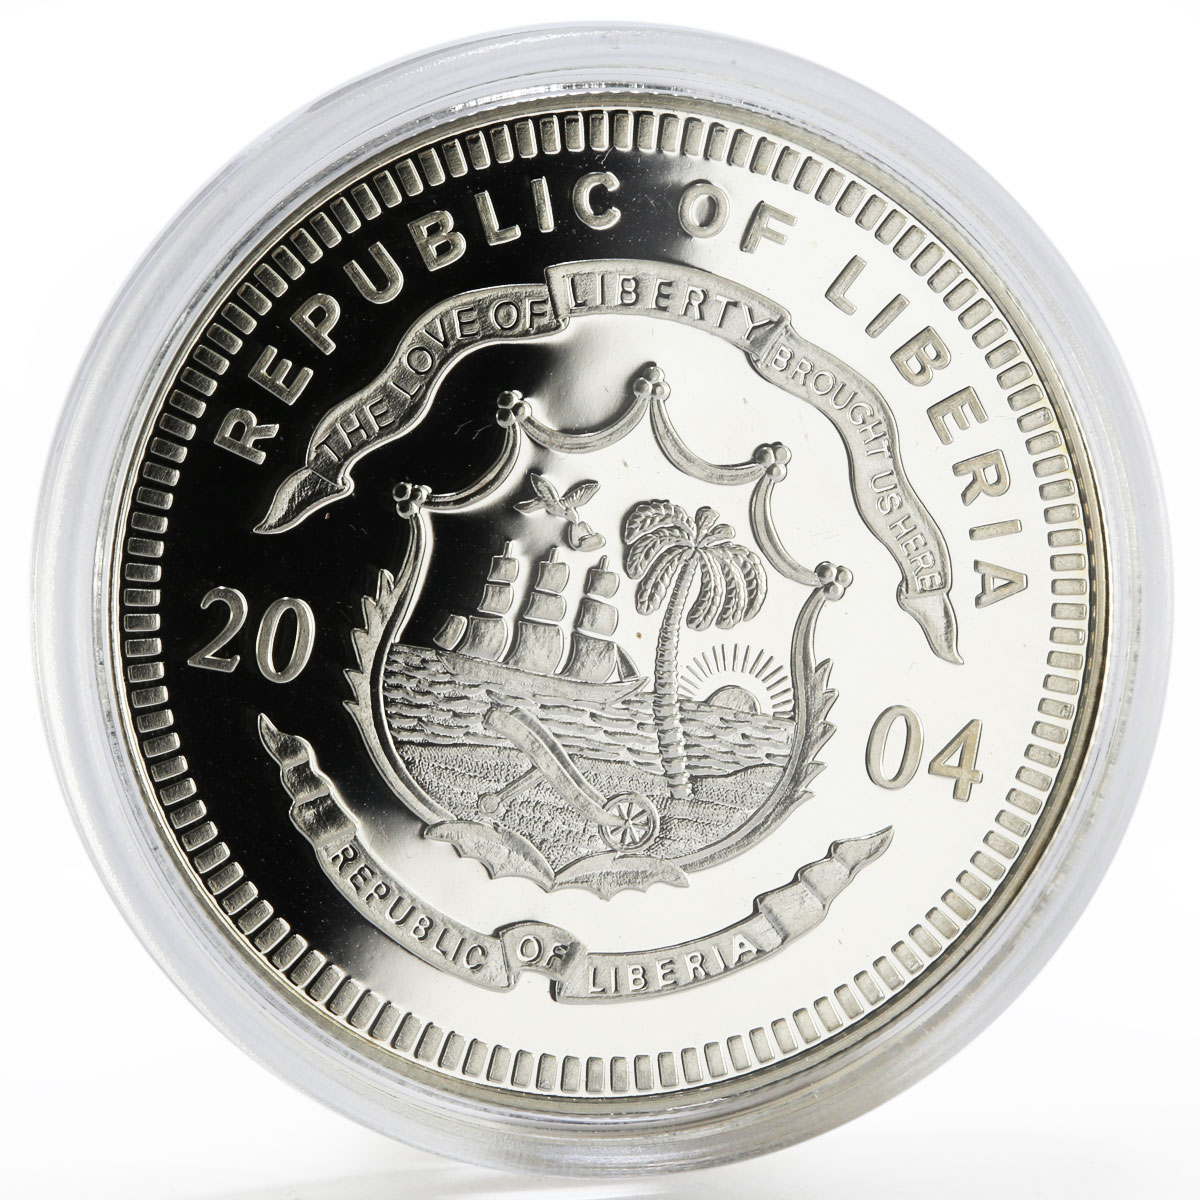 Liberia 20 dollars Johannes Gutenberg The First Book Printer silver coin 2004